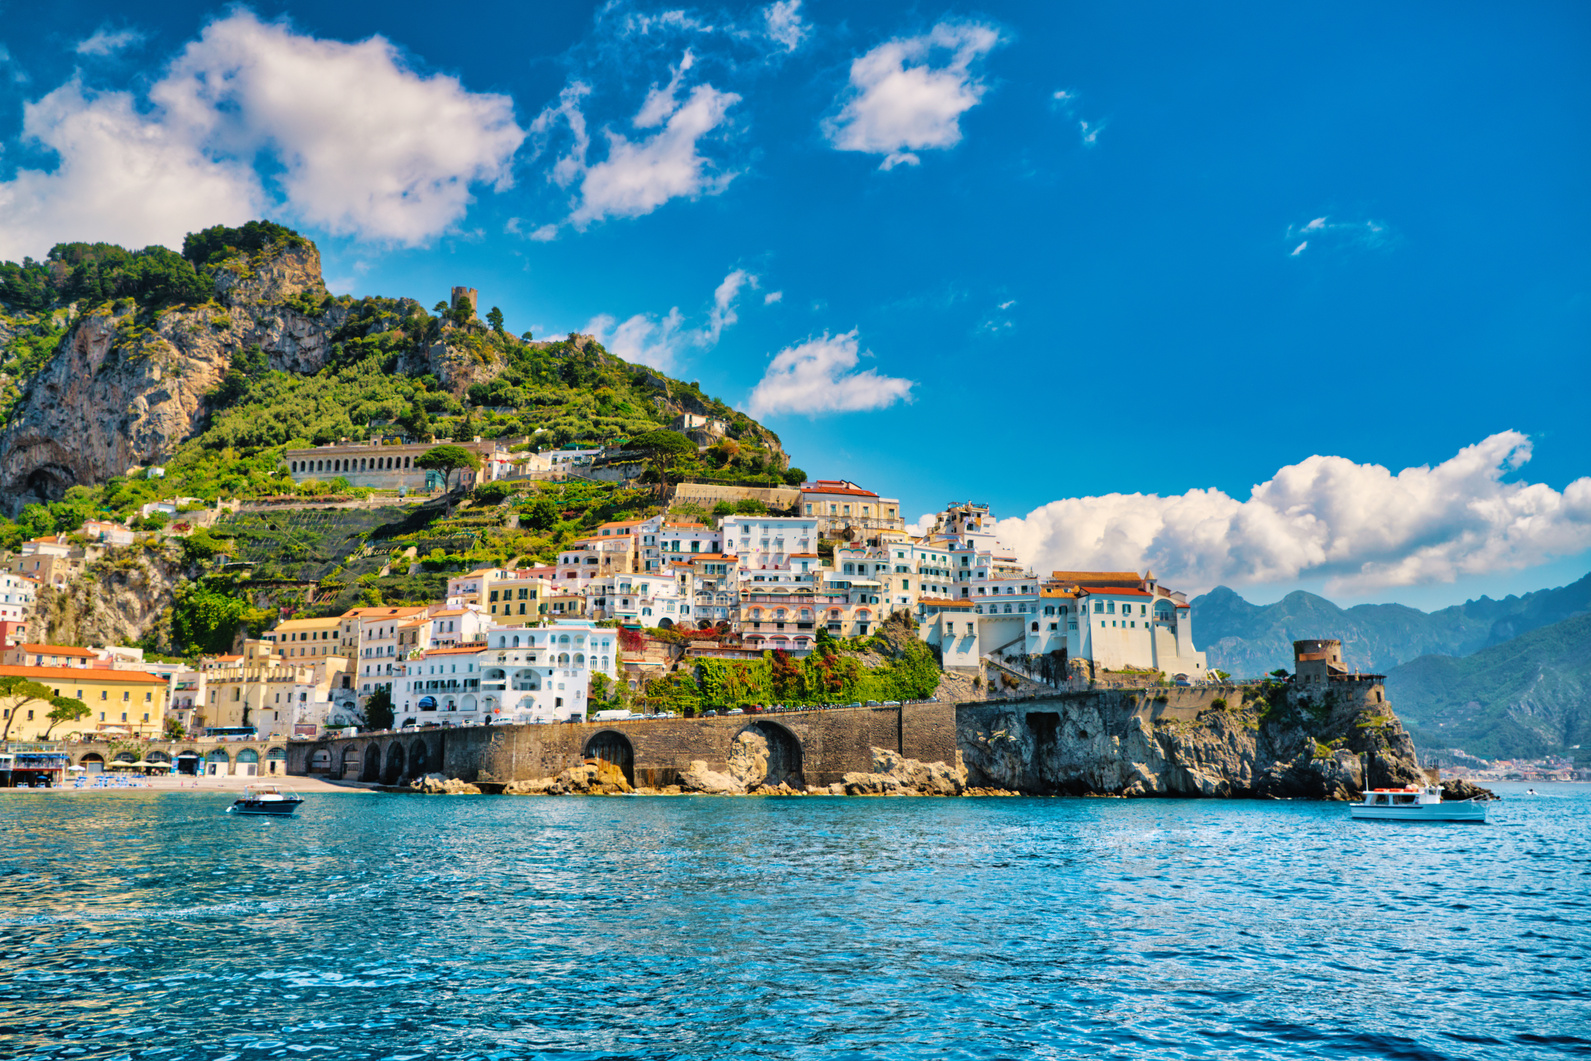 Amalfi - Amalfi coast - Italy